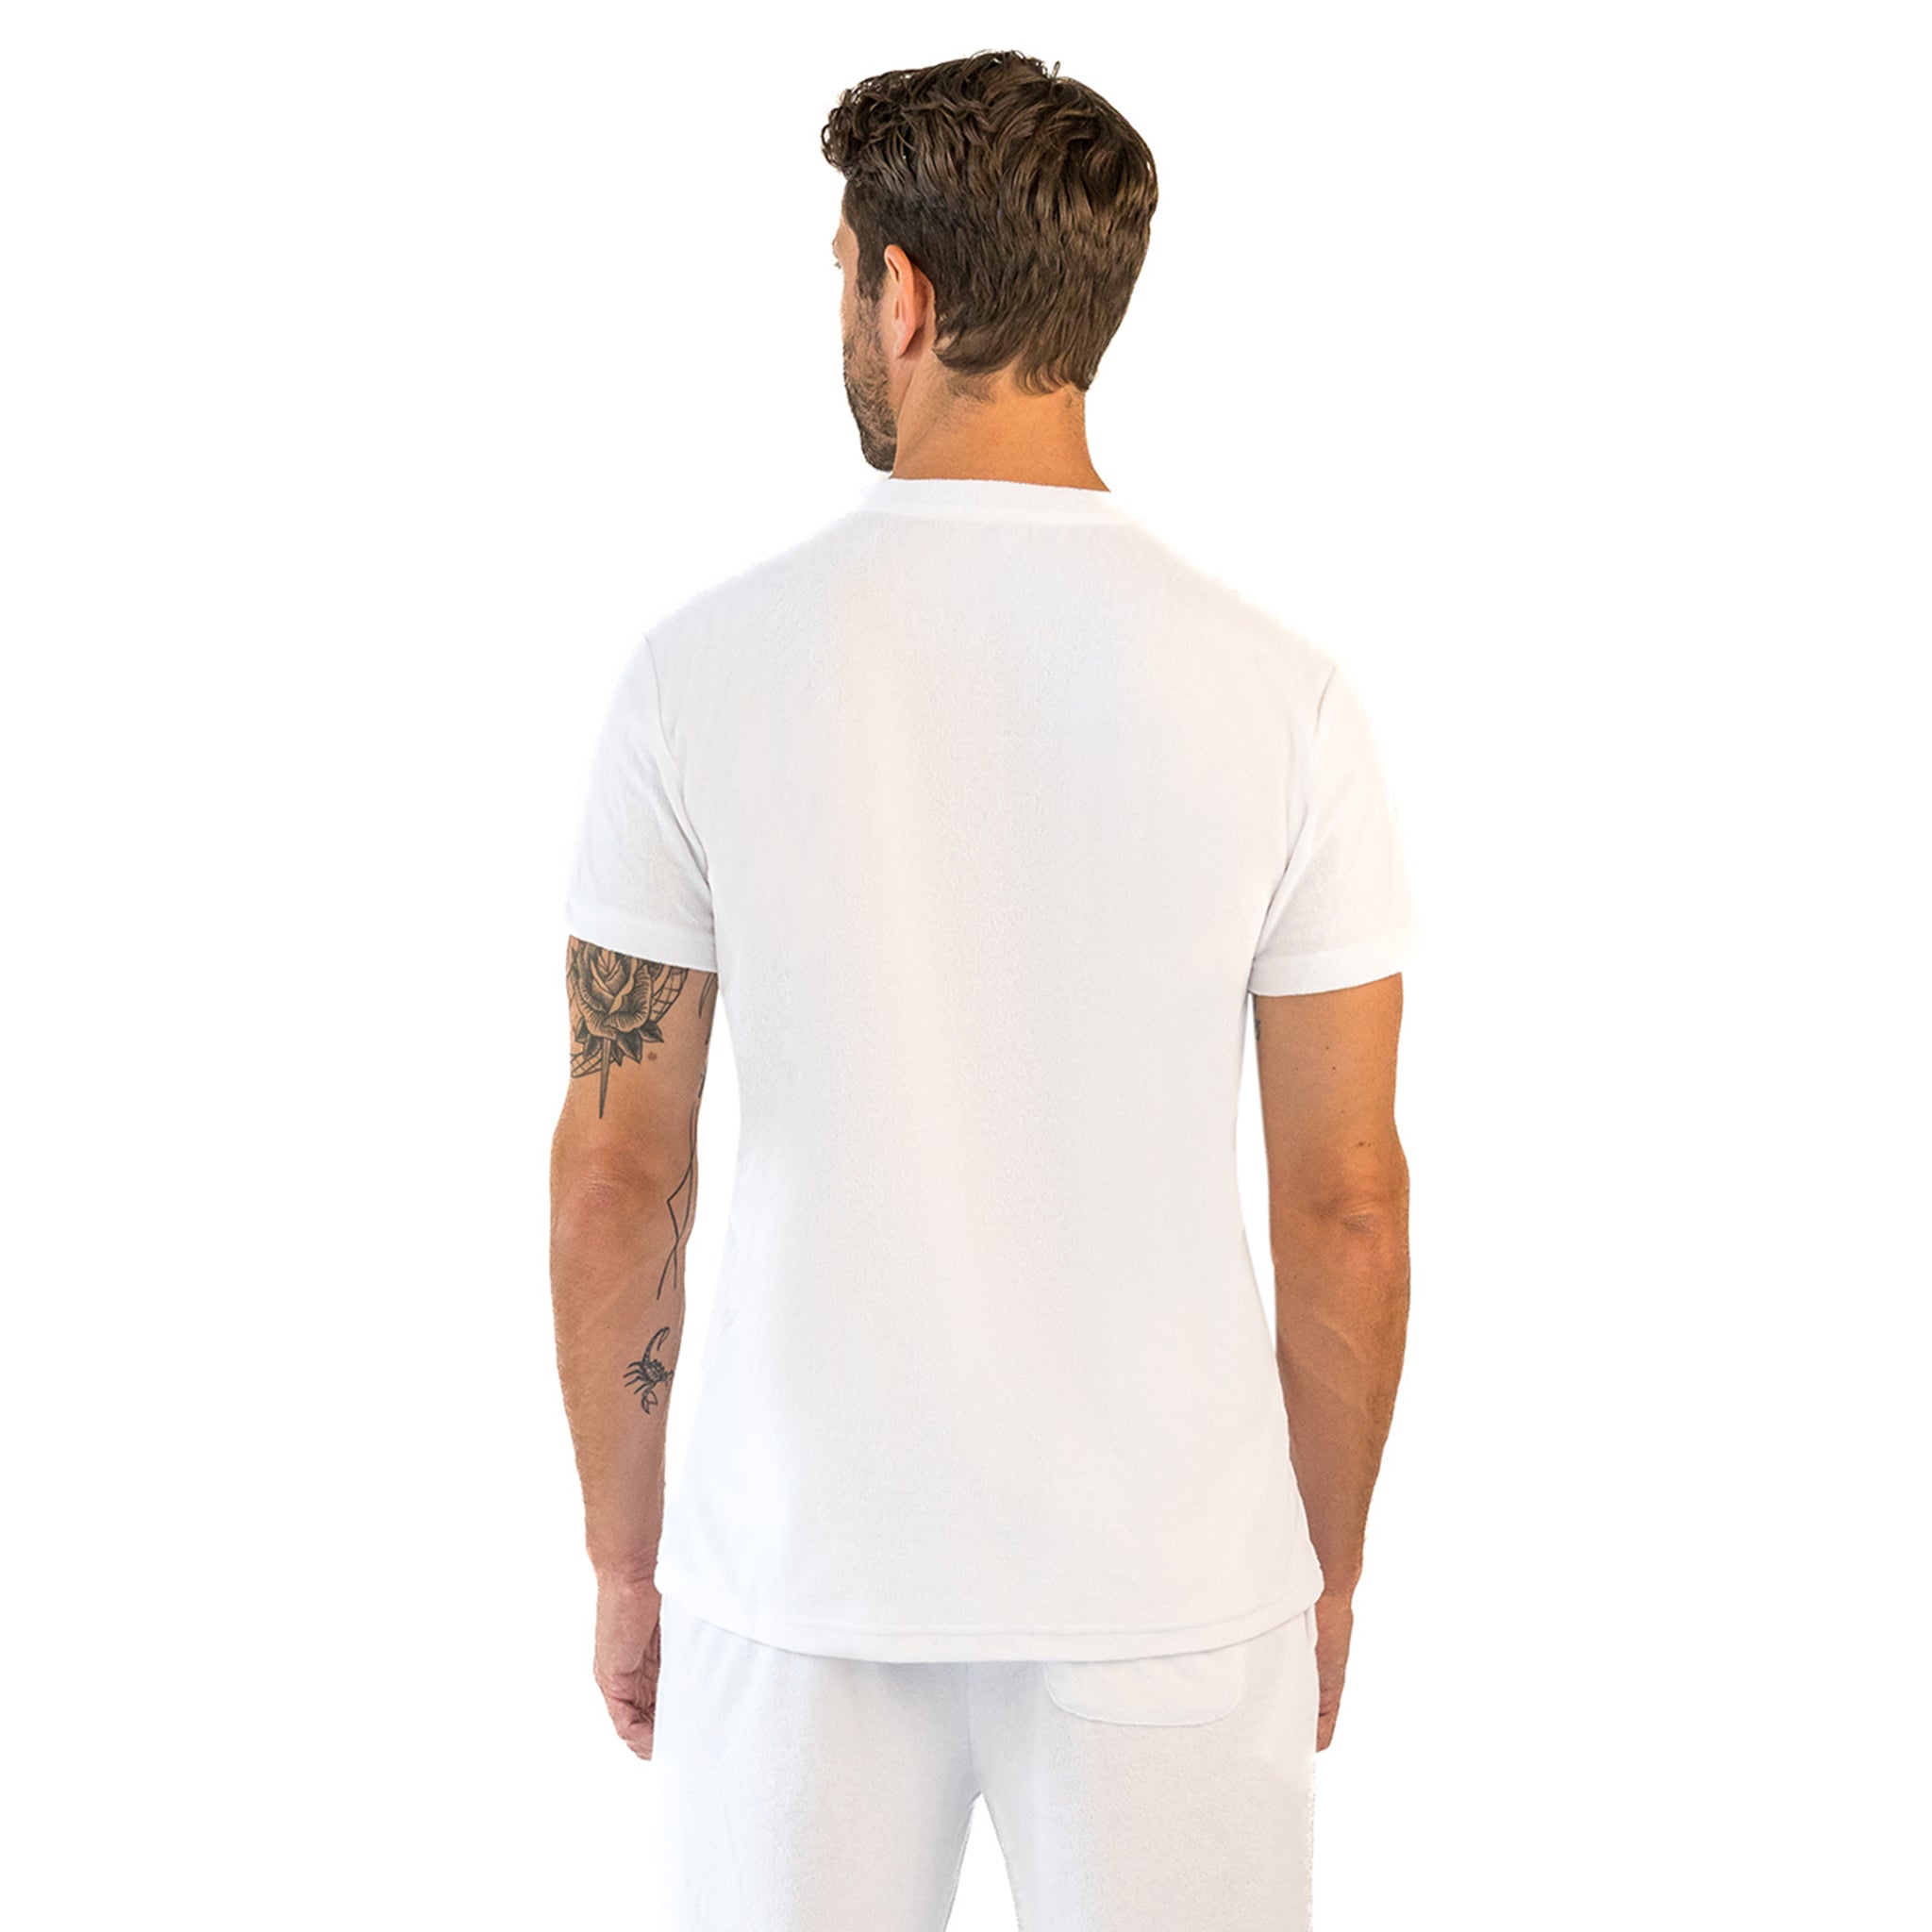 Terry T-shirt / White